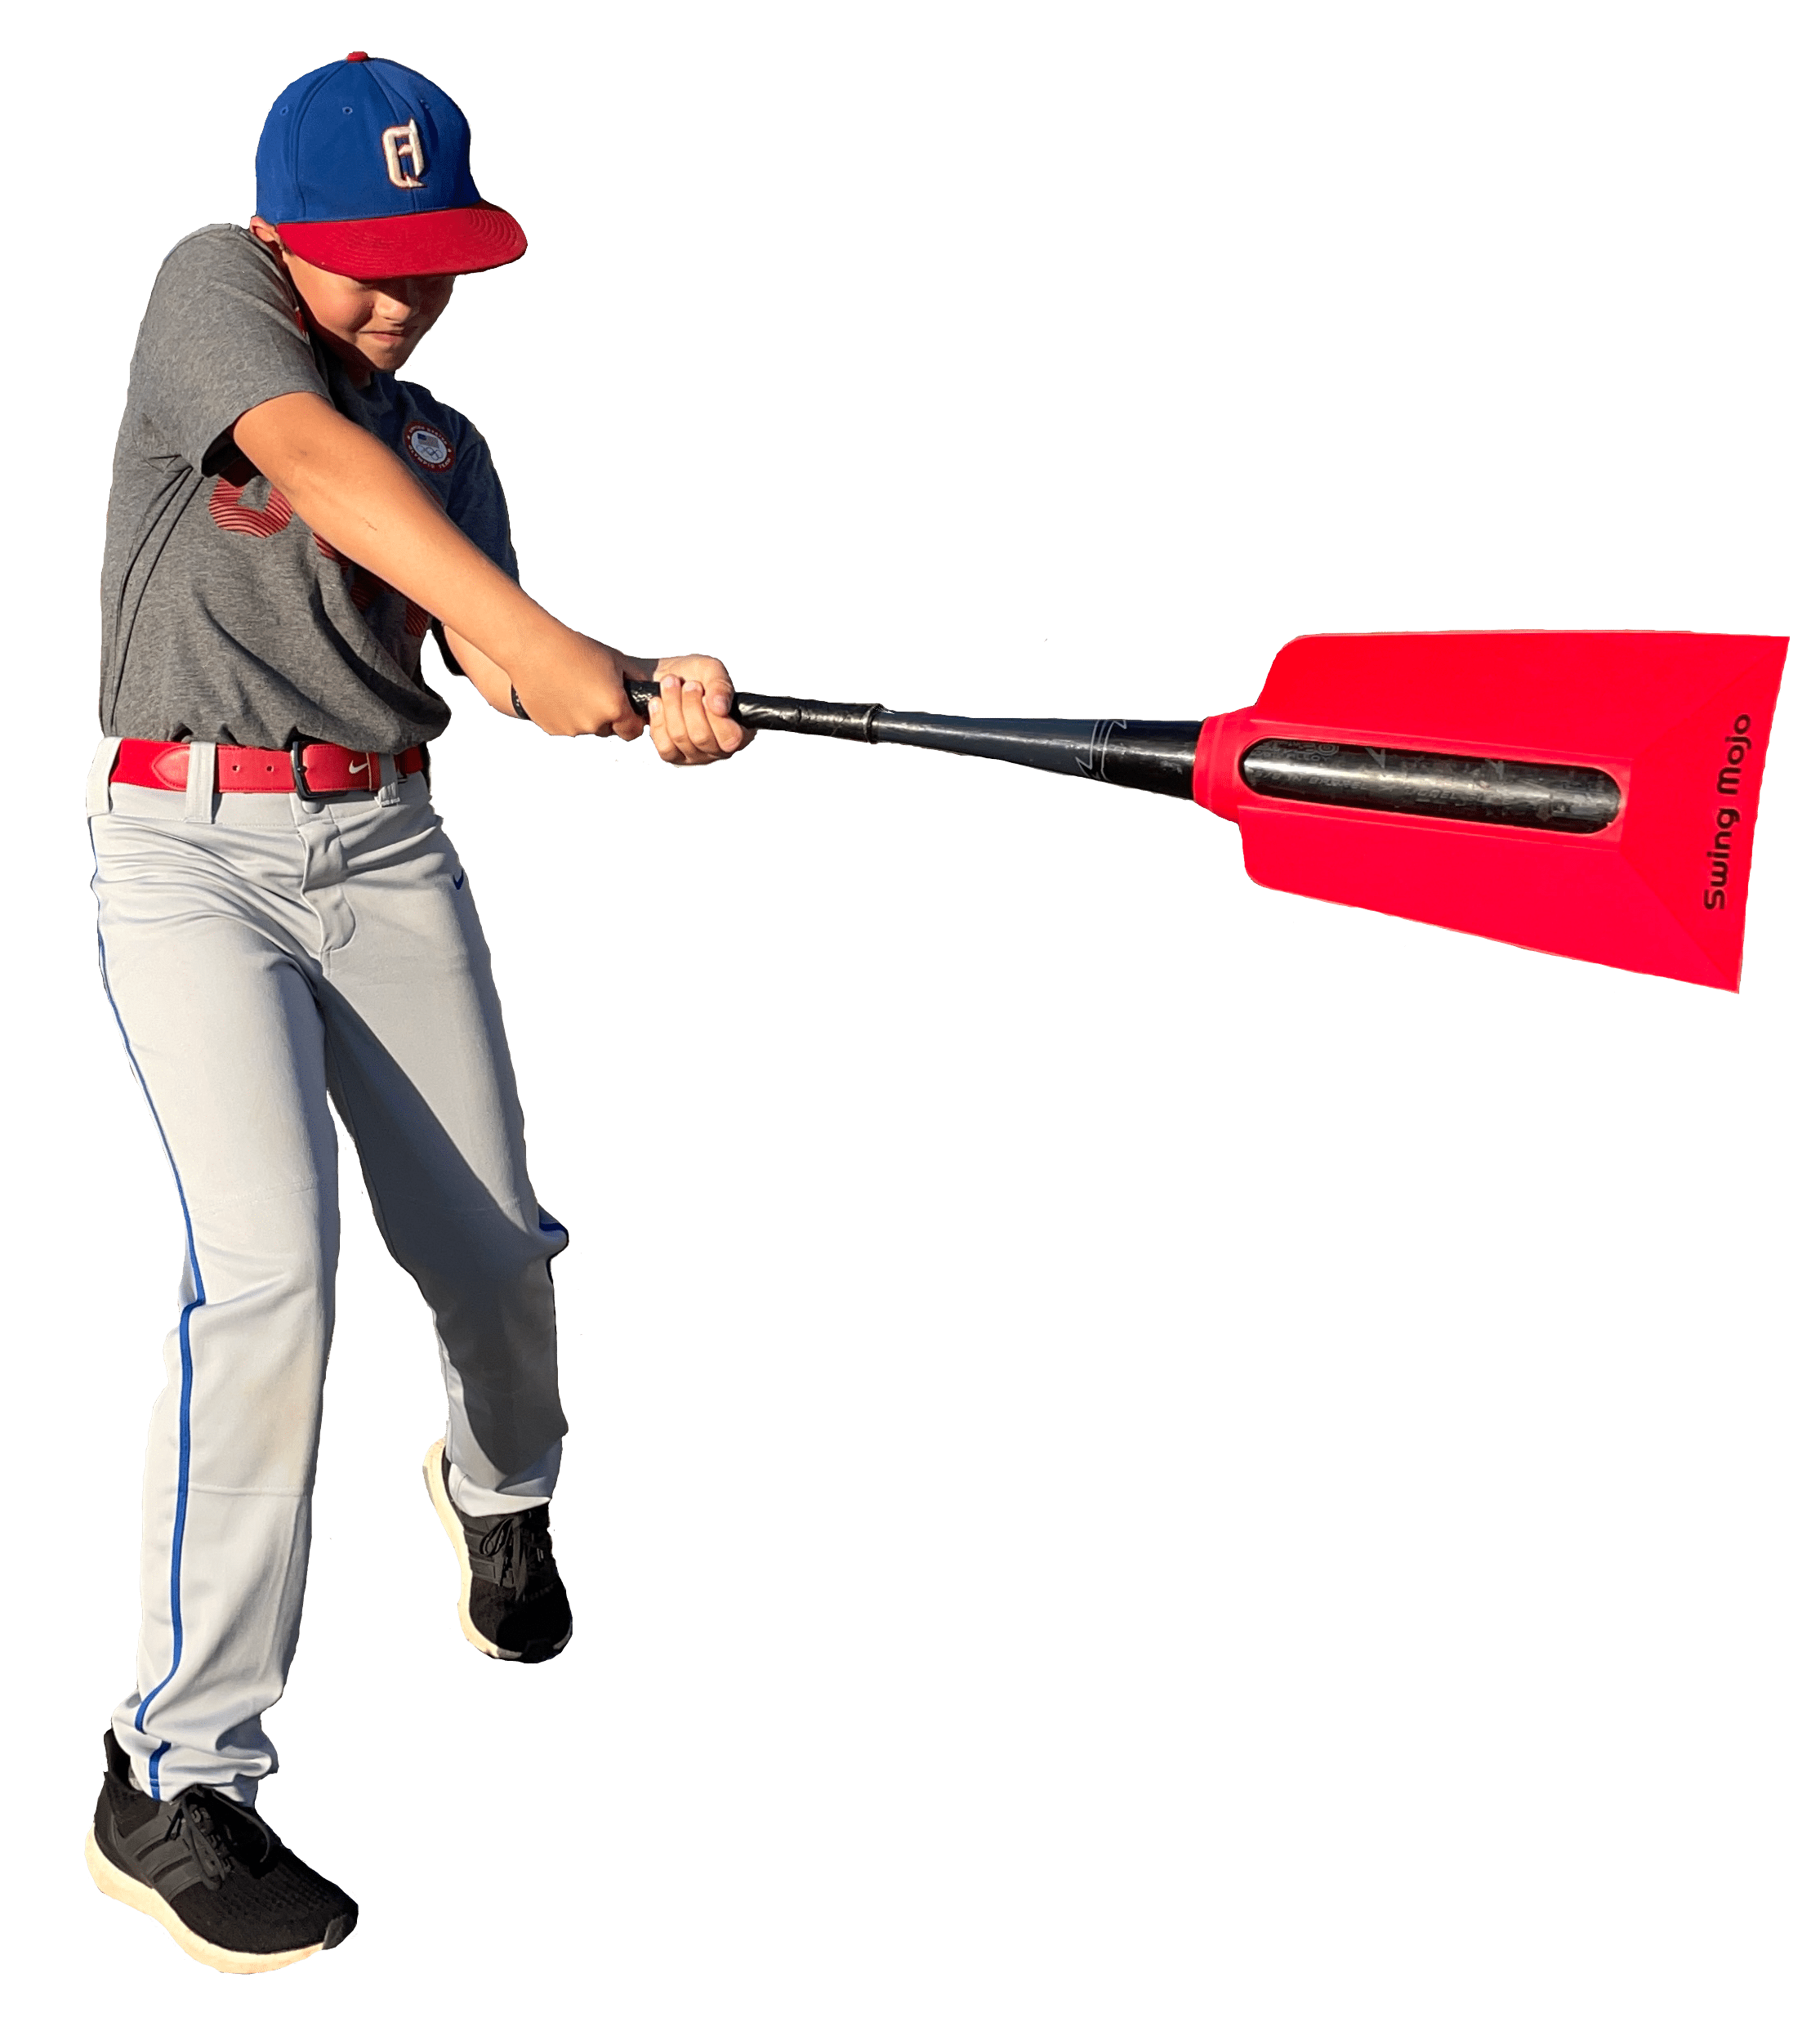 Sklz Hit-a-way Softbol Swing Entrenador-Negro/Amarillo 